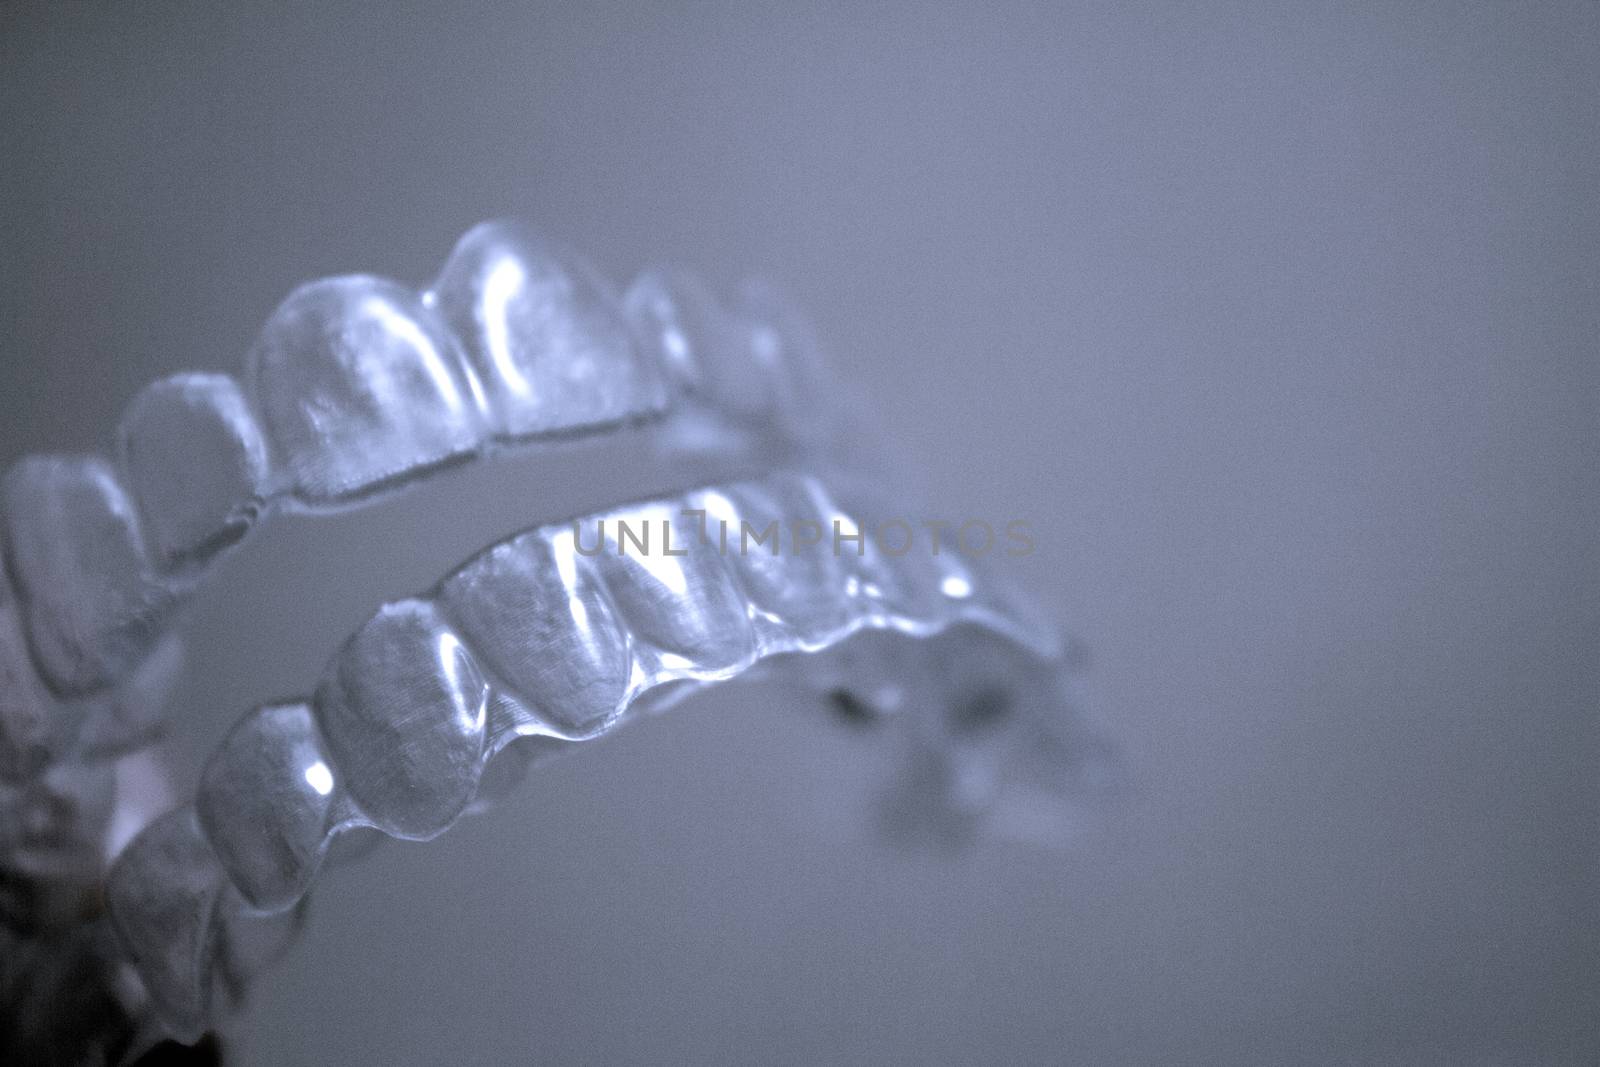 Transparent dental orthodontics to correct dental alignment. No people